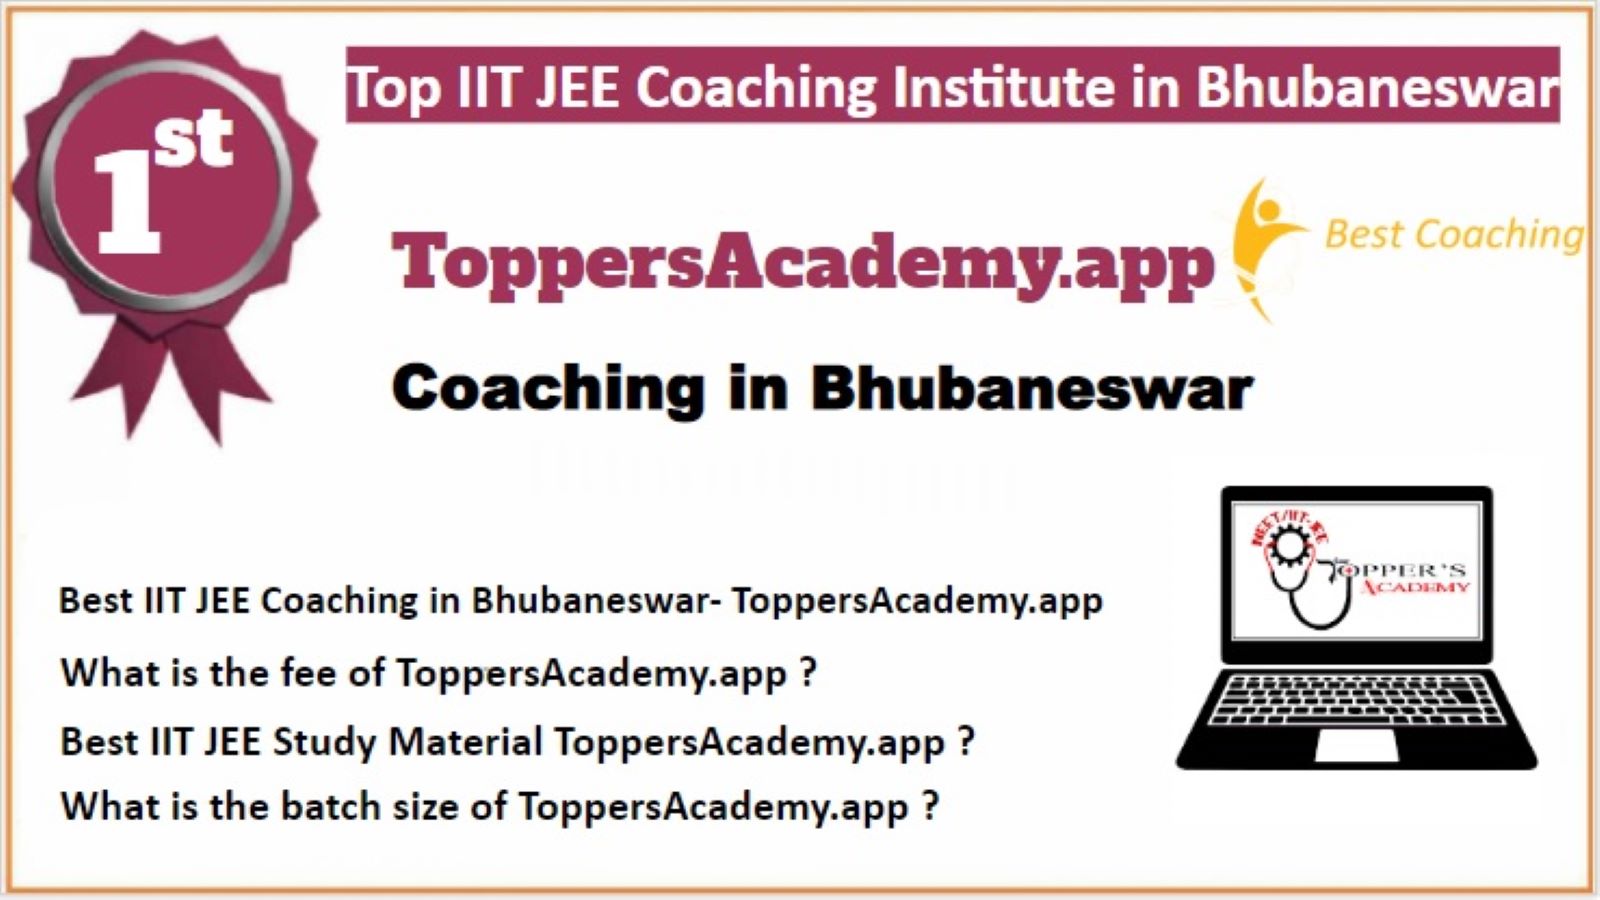 Best IIT JEE Coaching in Bhubaneswar